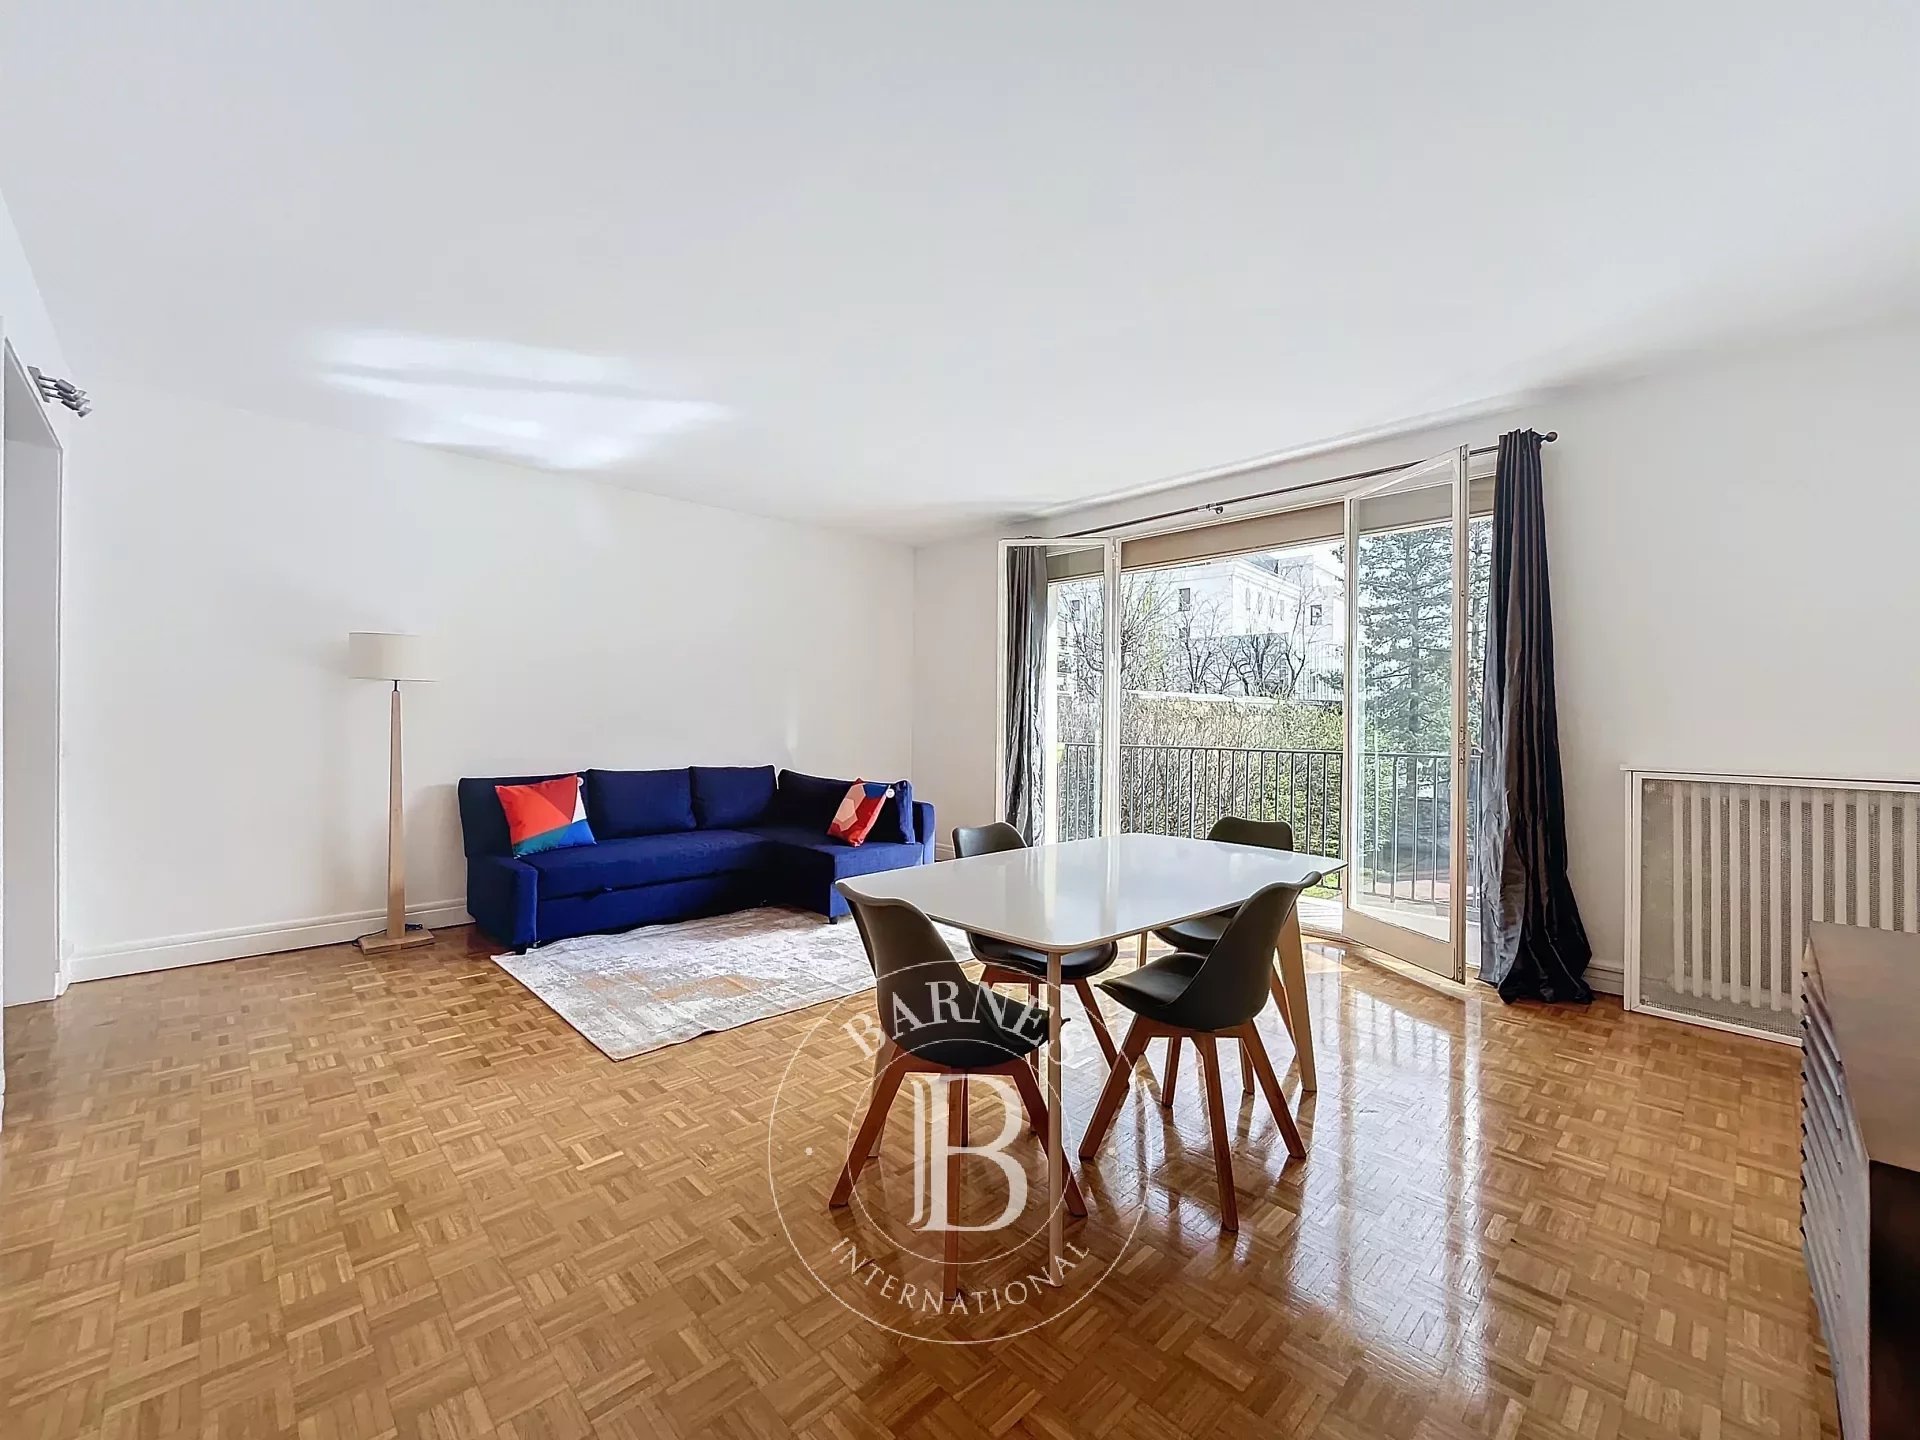 Appartement a louer neuilly-sur-seine - 2 pièce(s) - 69.24 m2 - Surfyn